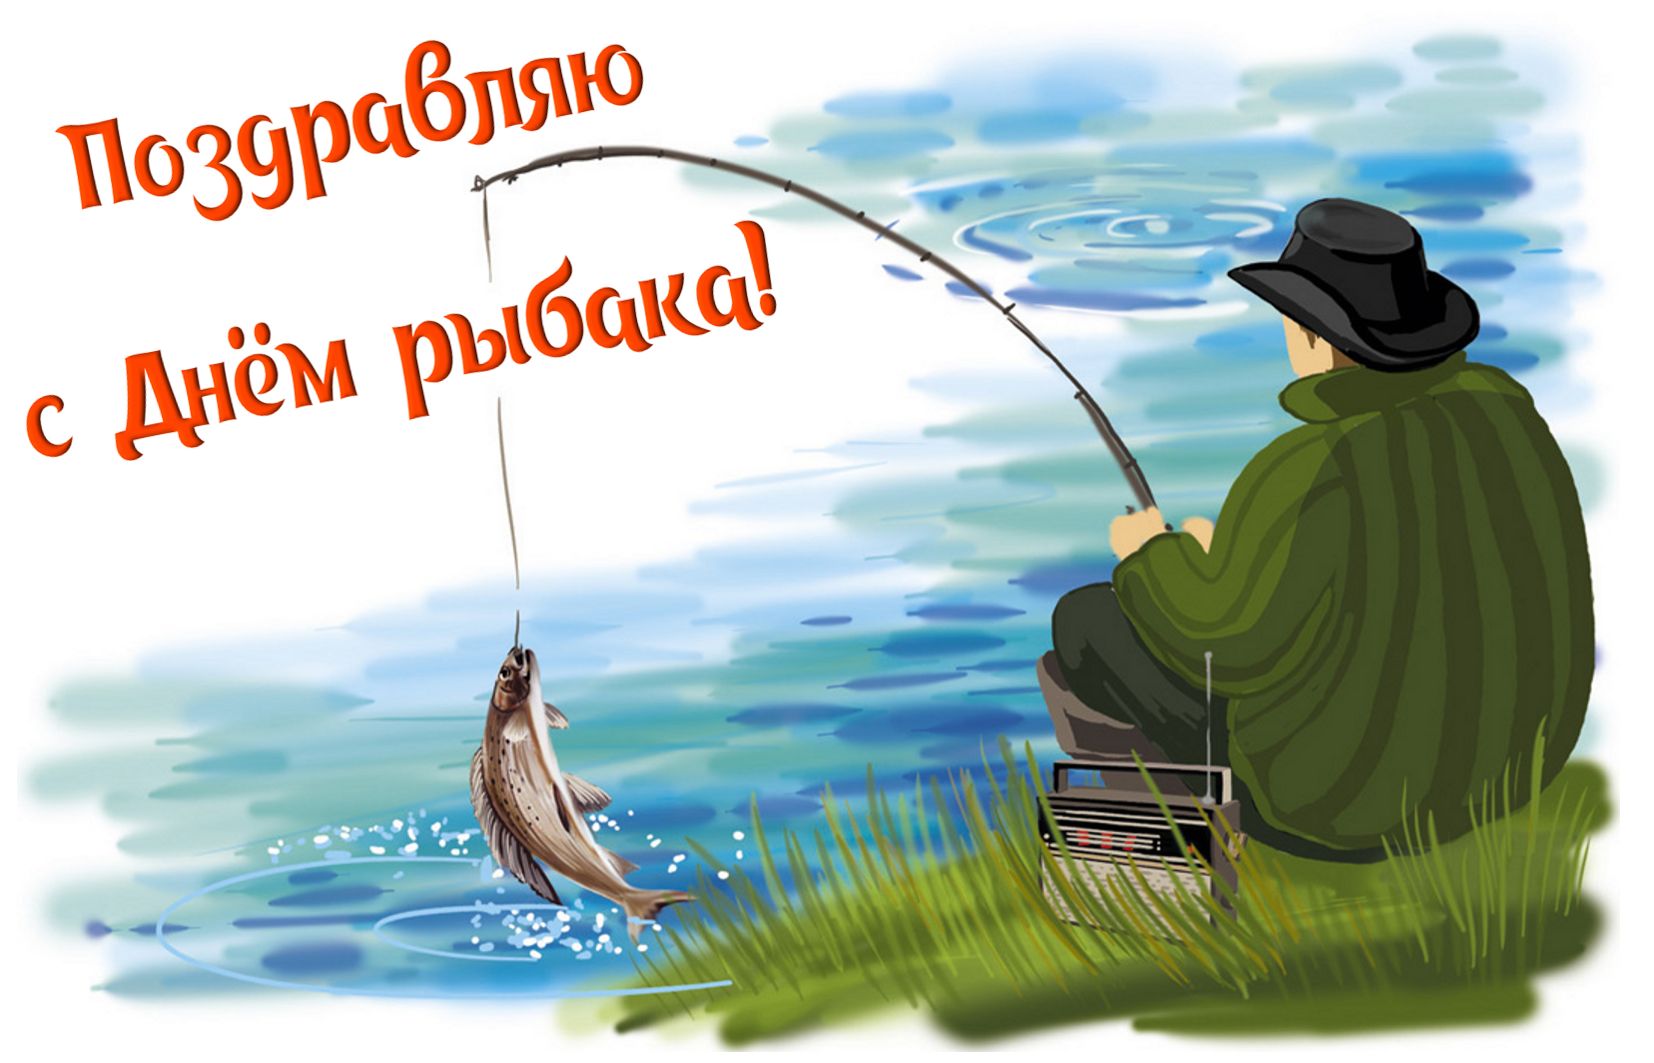 Картинка с рыбаком на берегу.